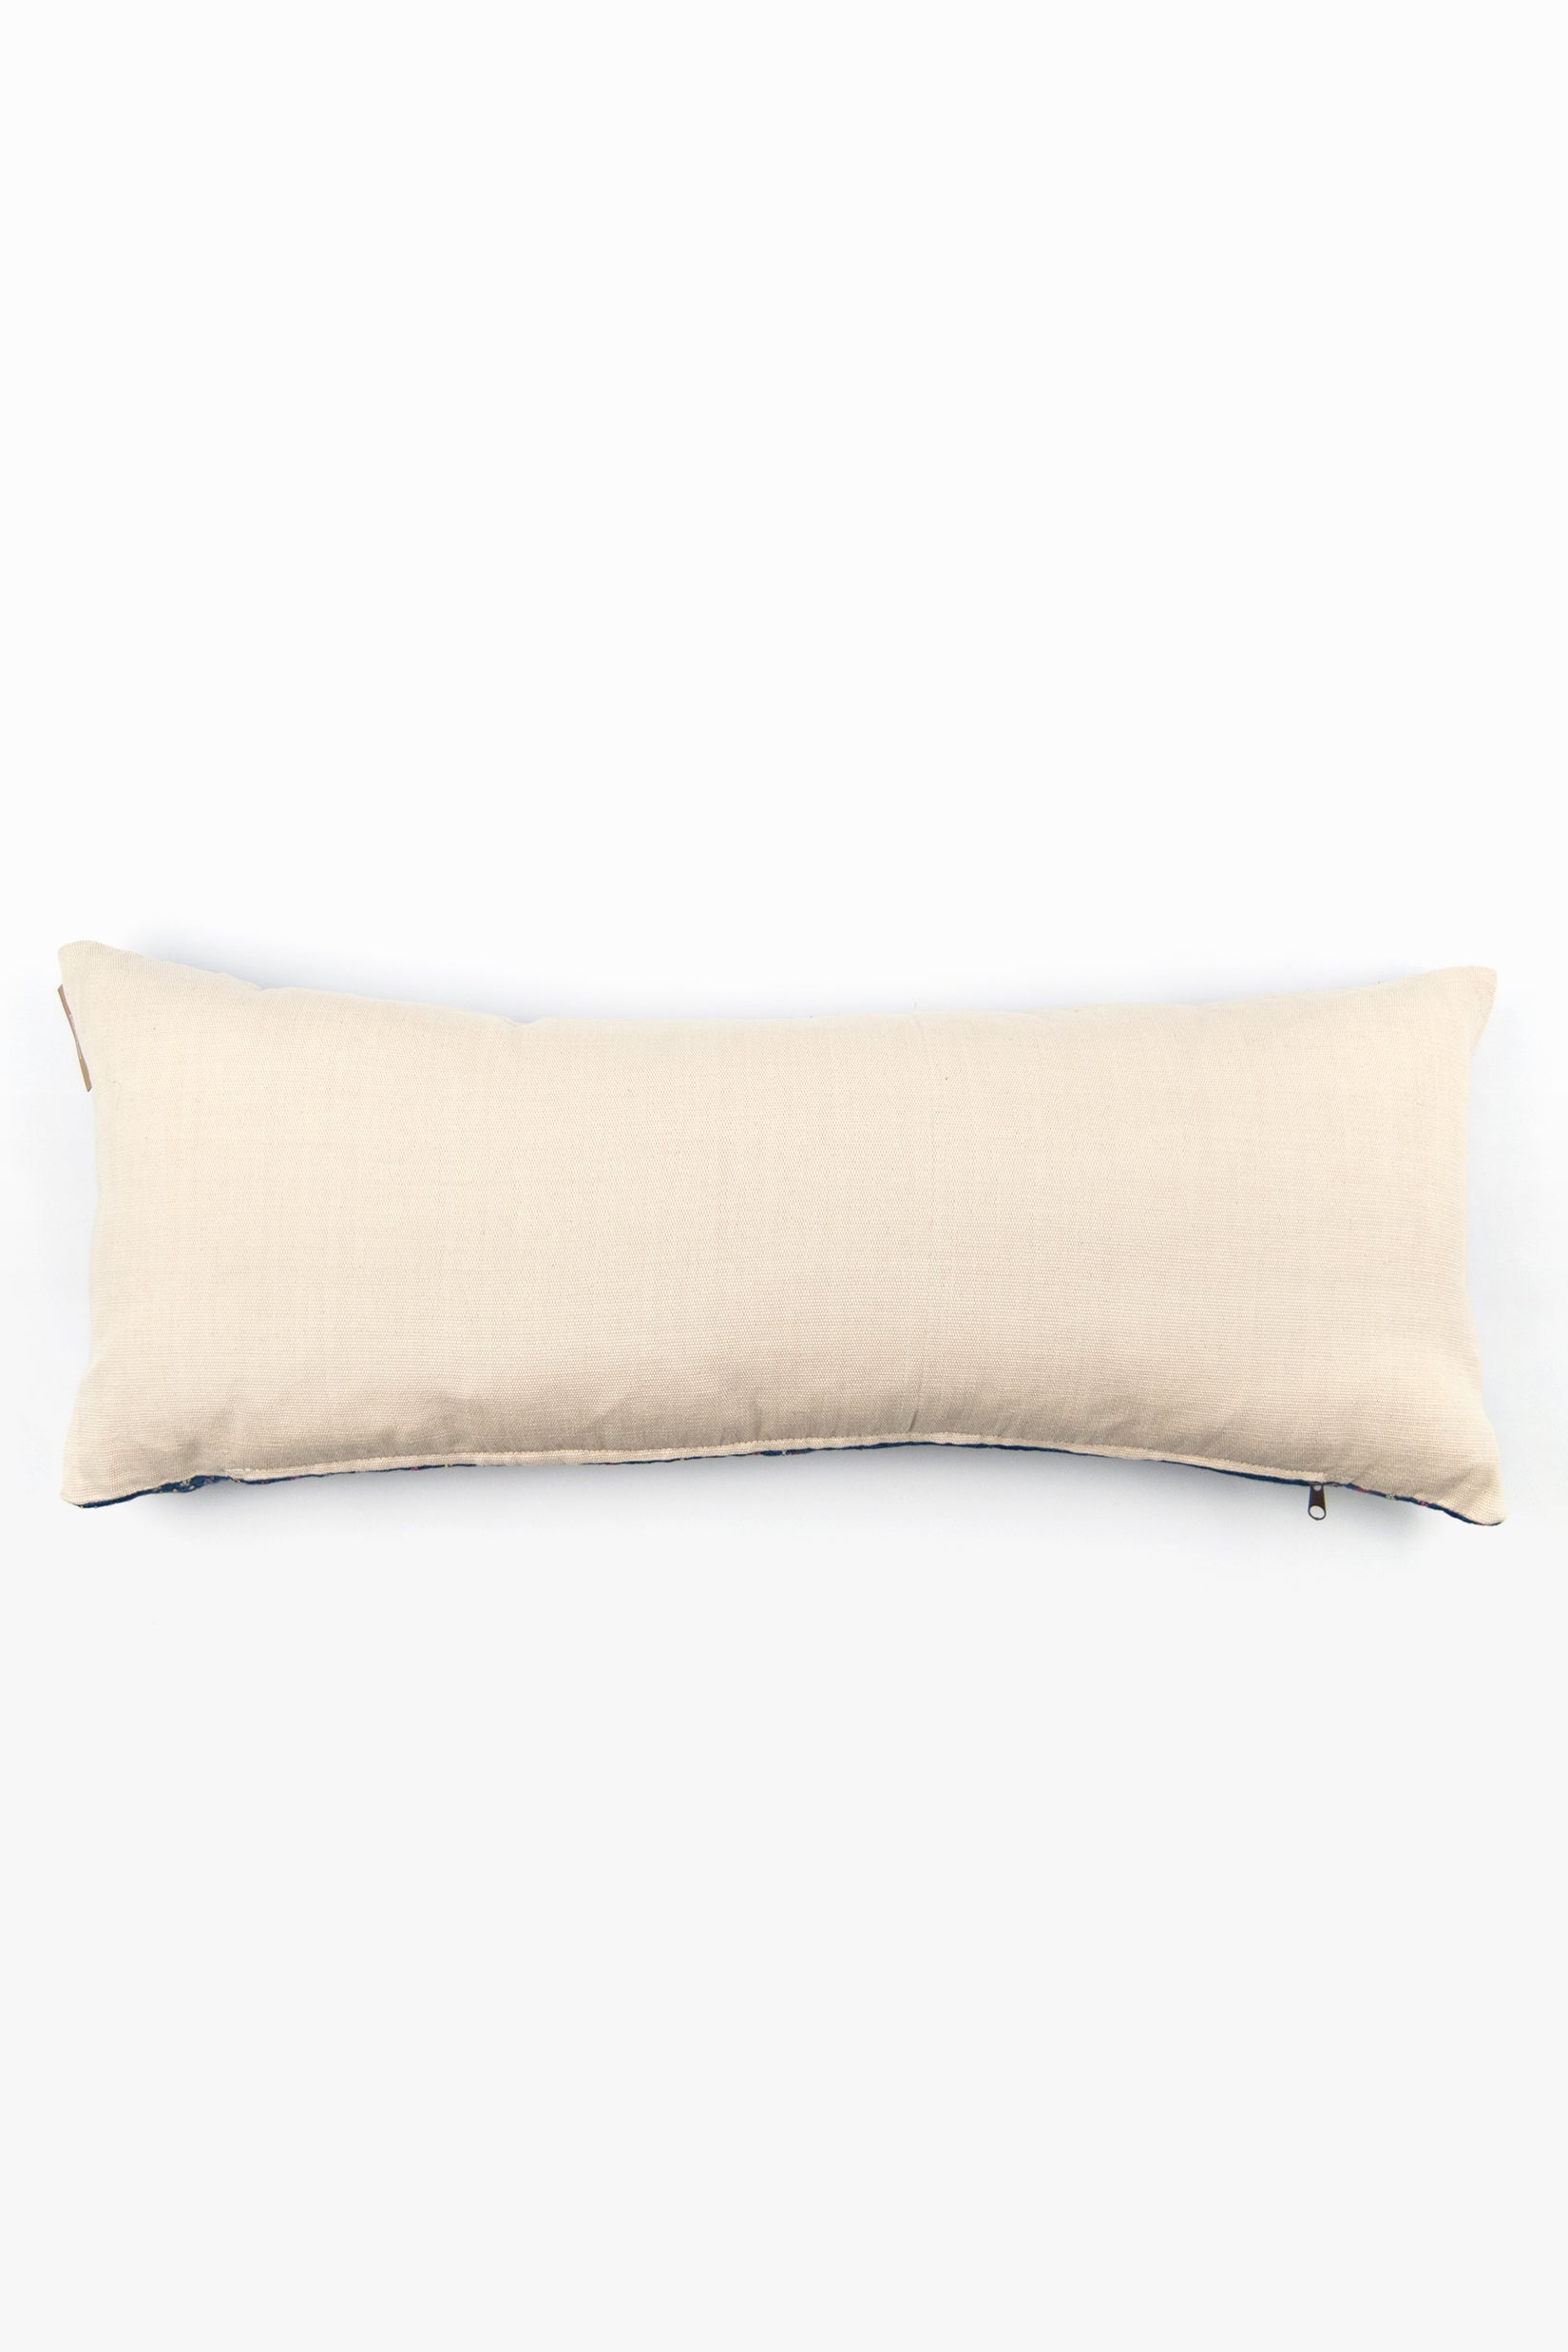 Maya Heirloom Pillow No. 980